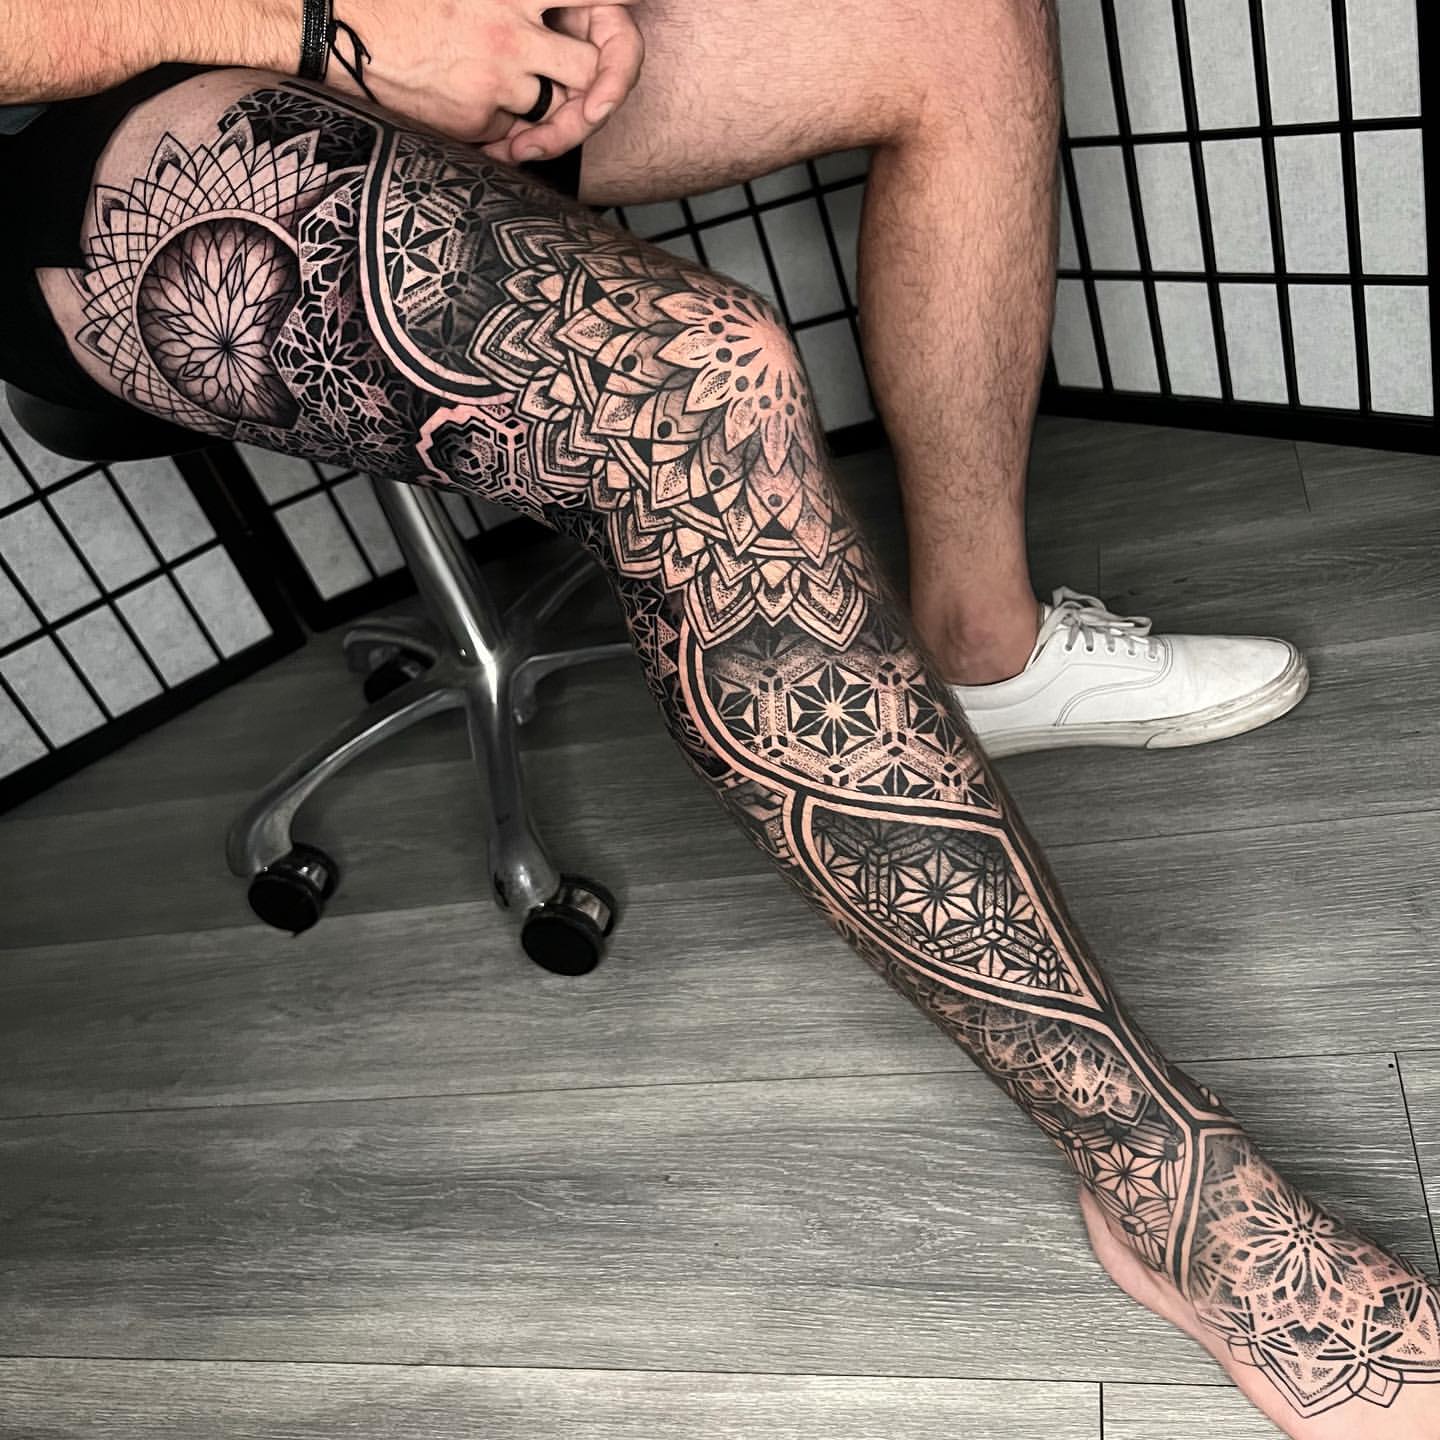 Tattoo uploaded by Mark Thompson • Tiger snake full leg sleeve • Tattoodo